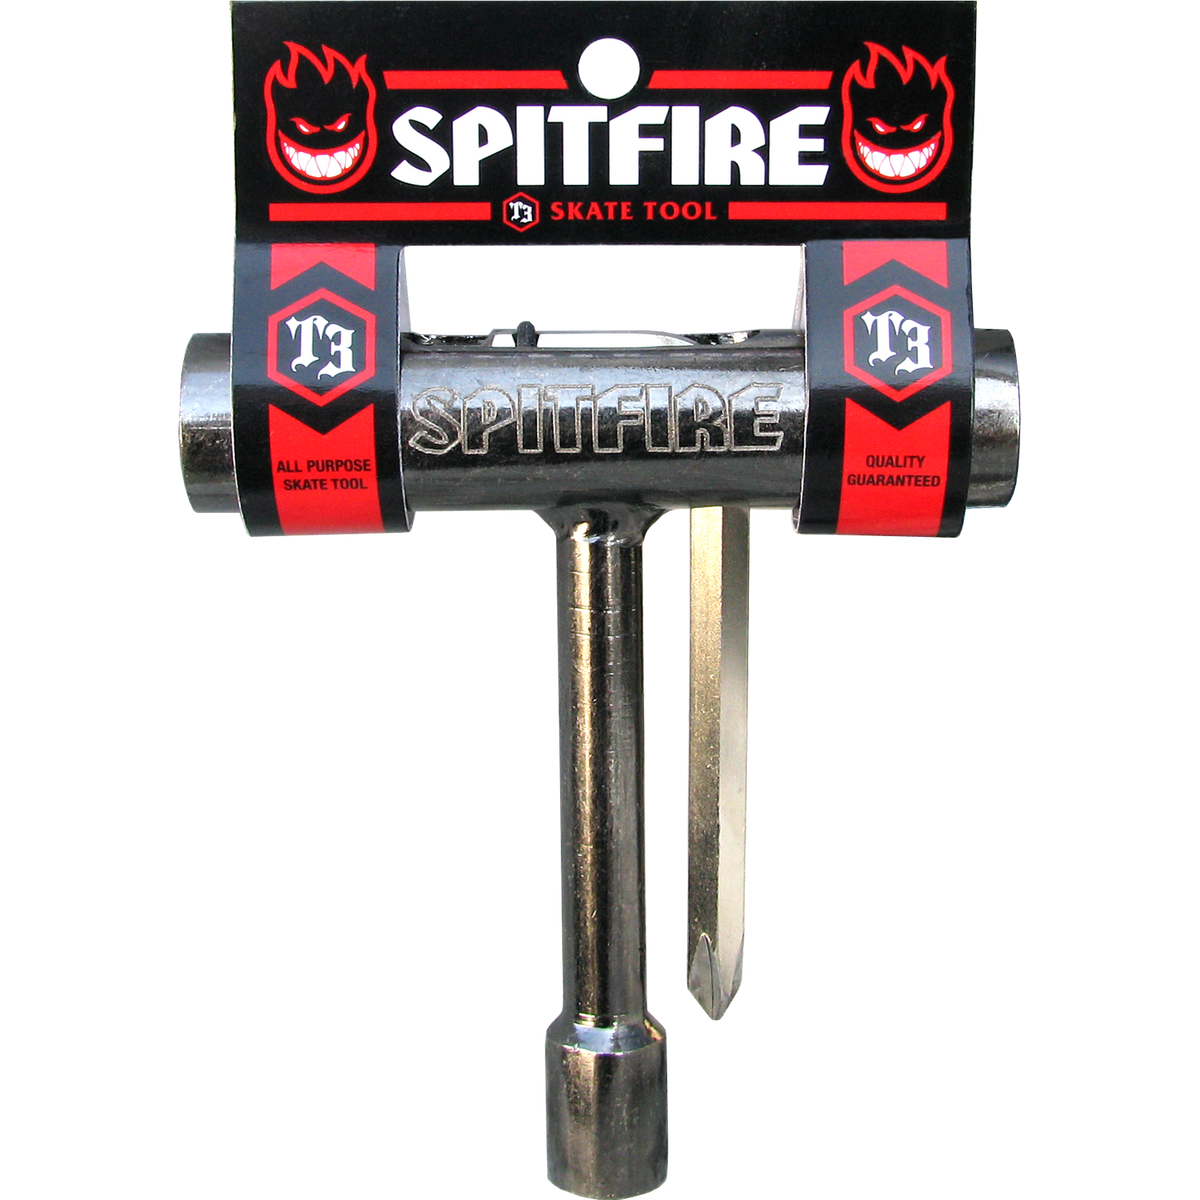 SPITFIRE // T3 SKATE TOOL